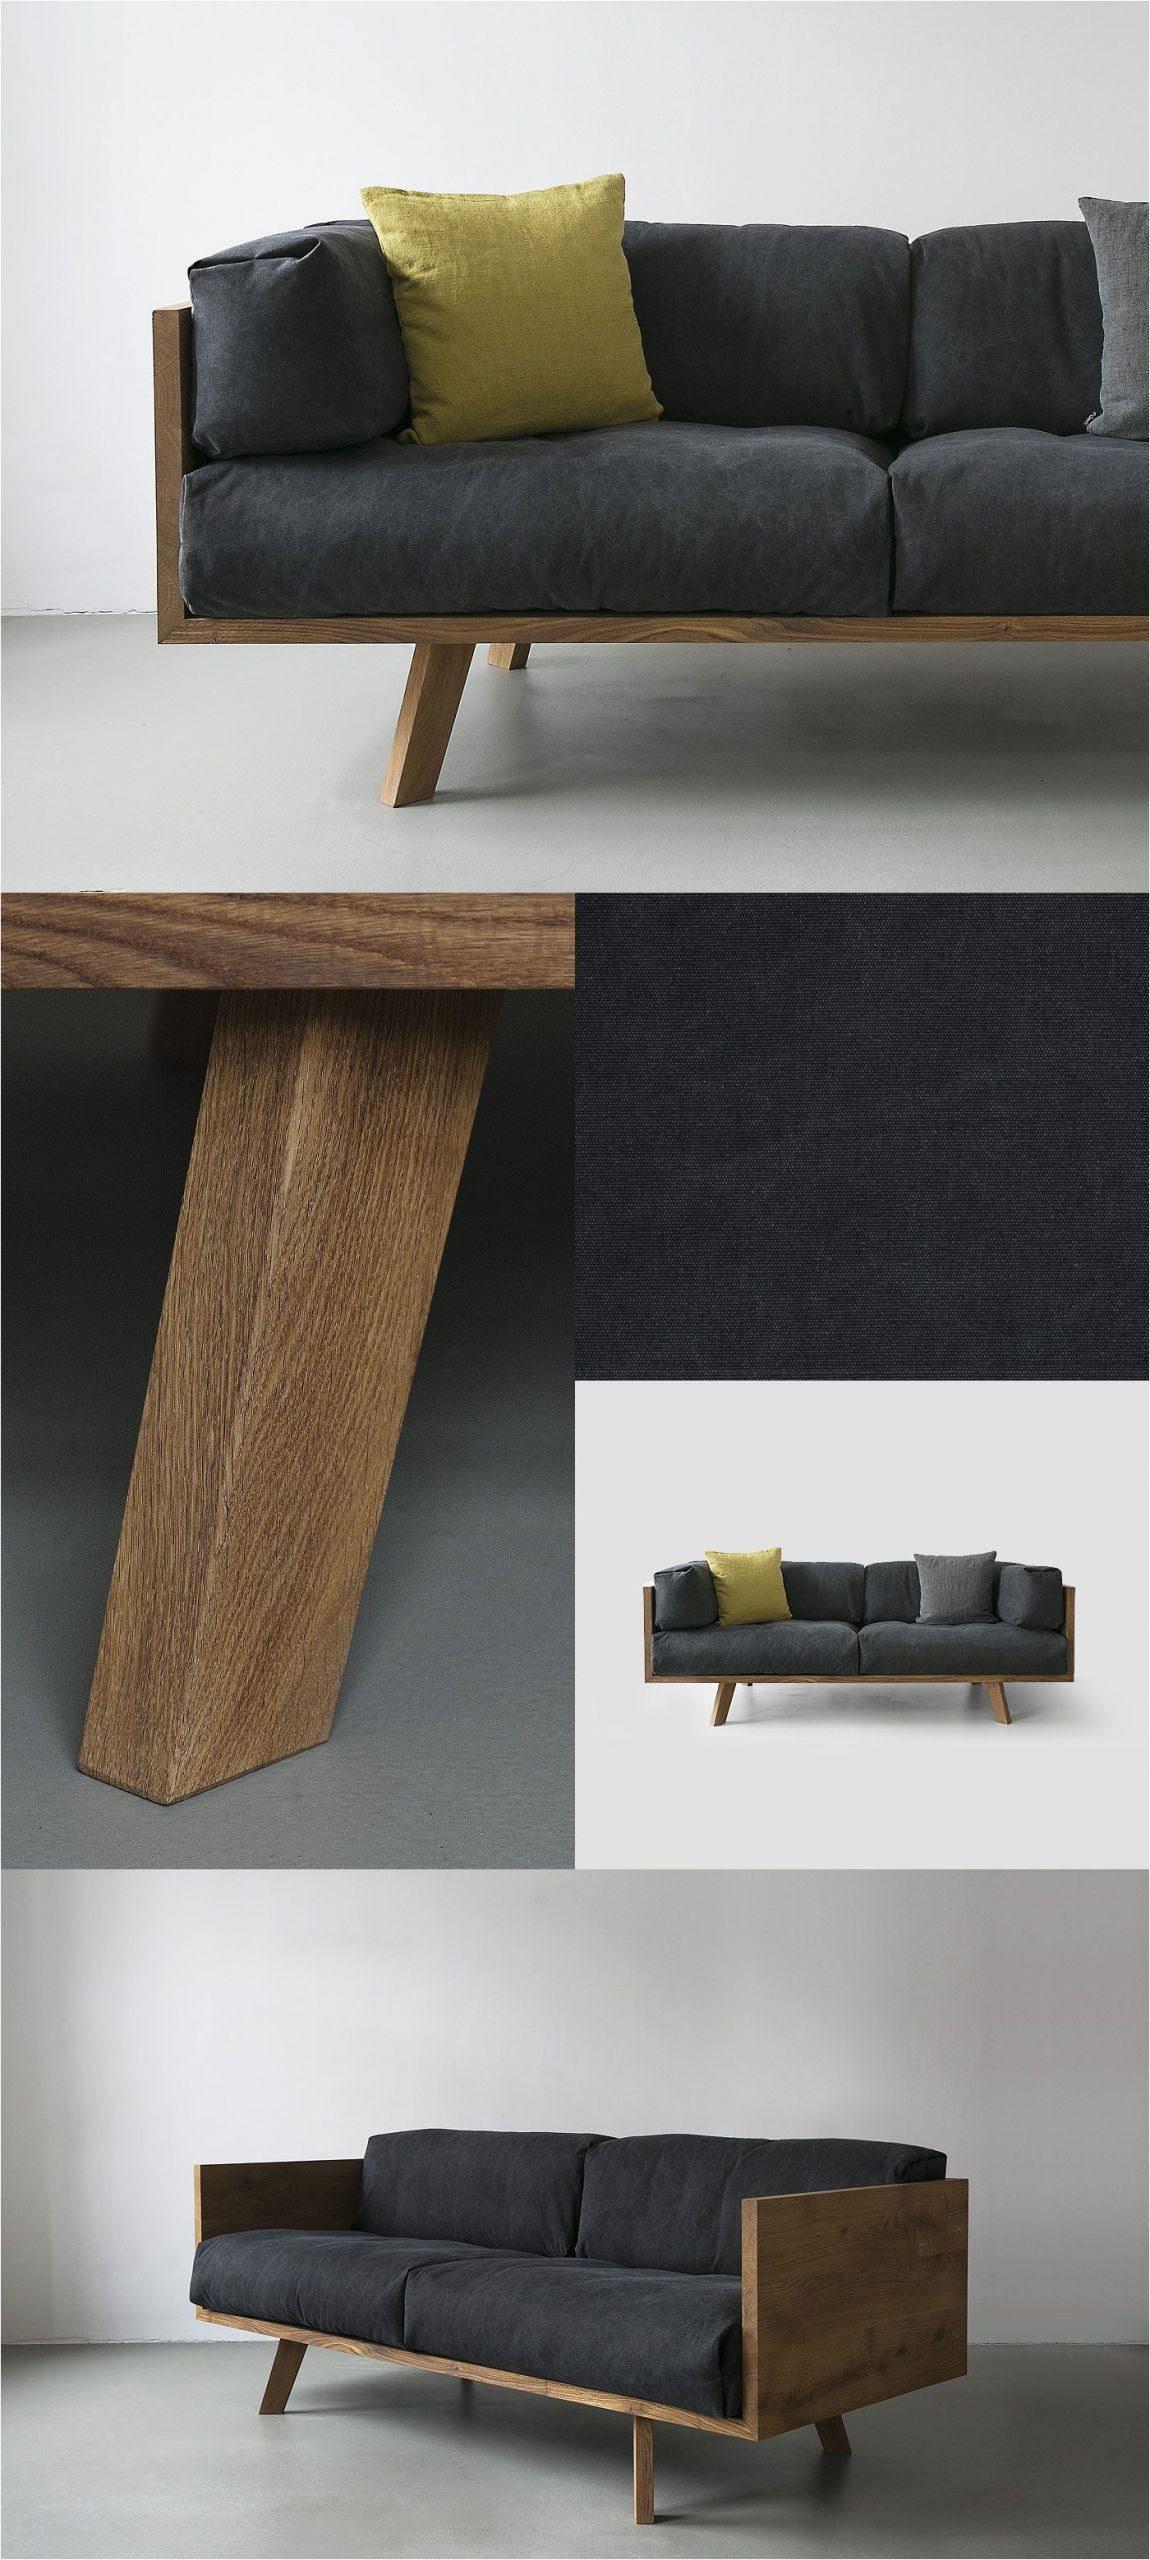 Small sofa Design Diy Furniture I Möbel Selber Bauen I Couch sofa Daybed I